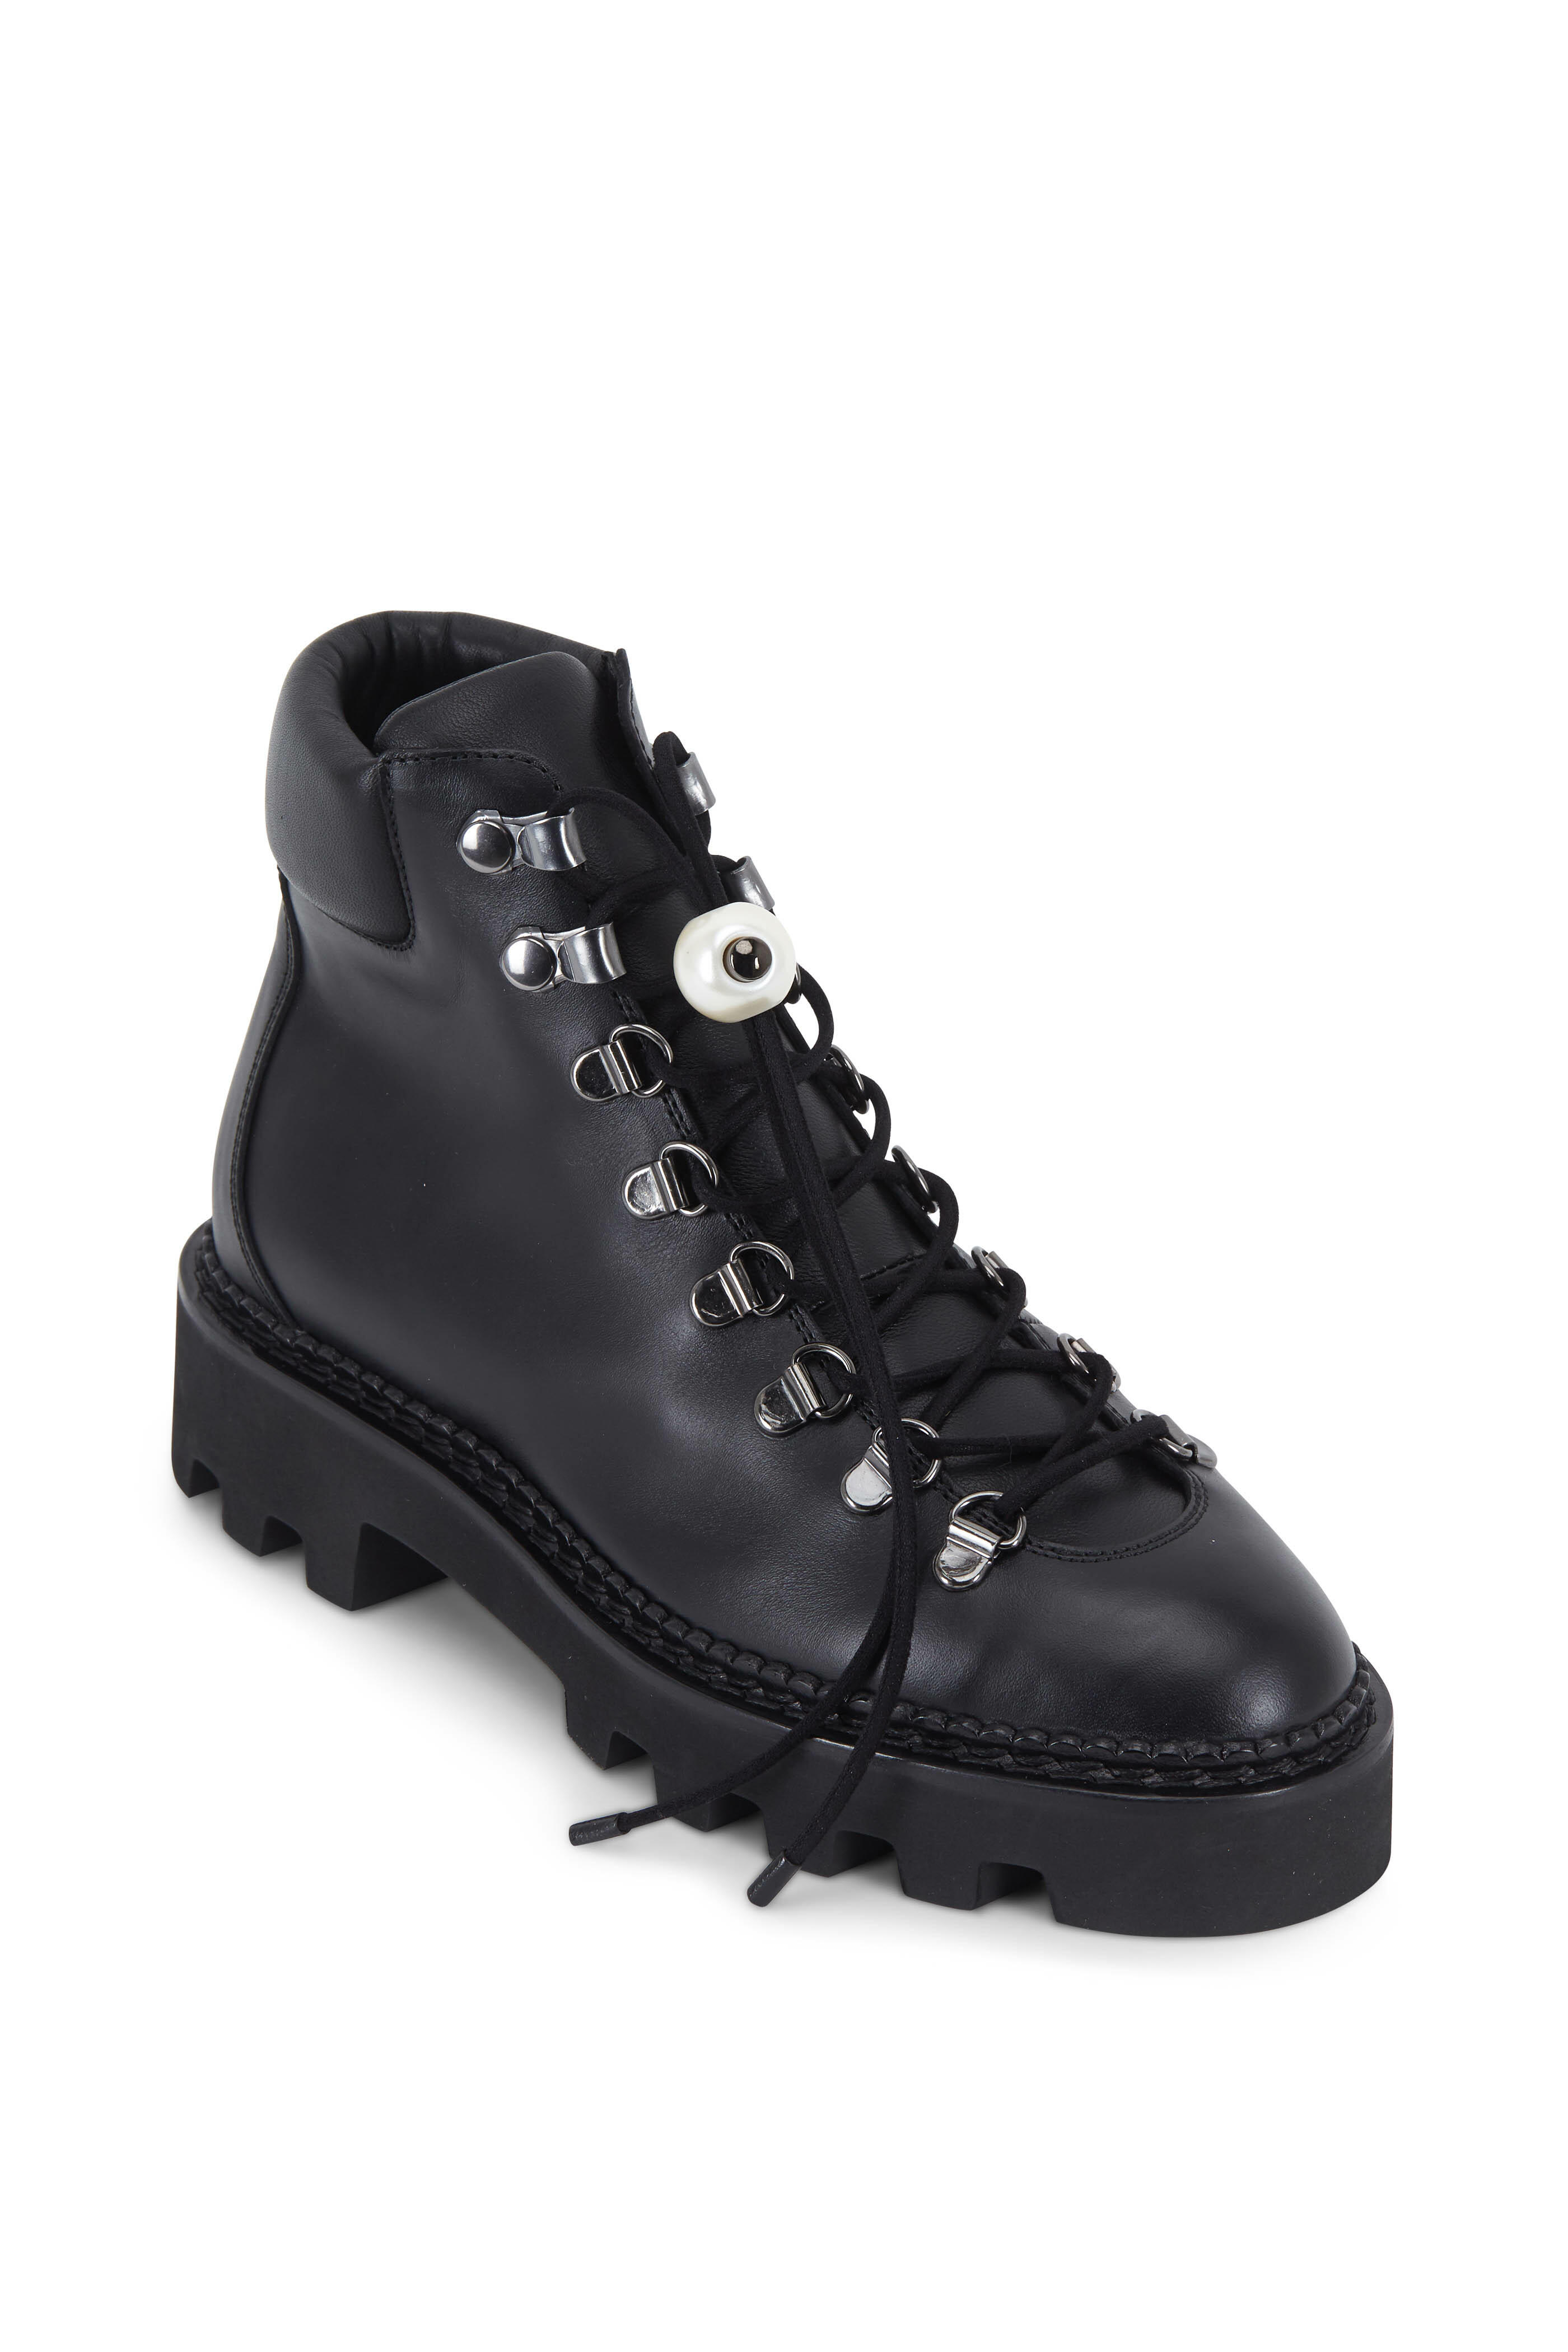 Nicholas Kirkwood Leather Chelsea Boots - ShopStyle